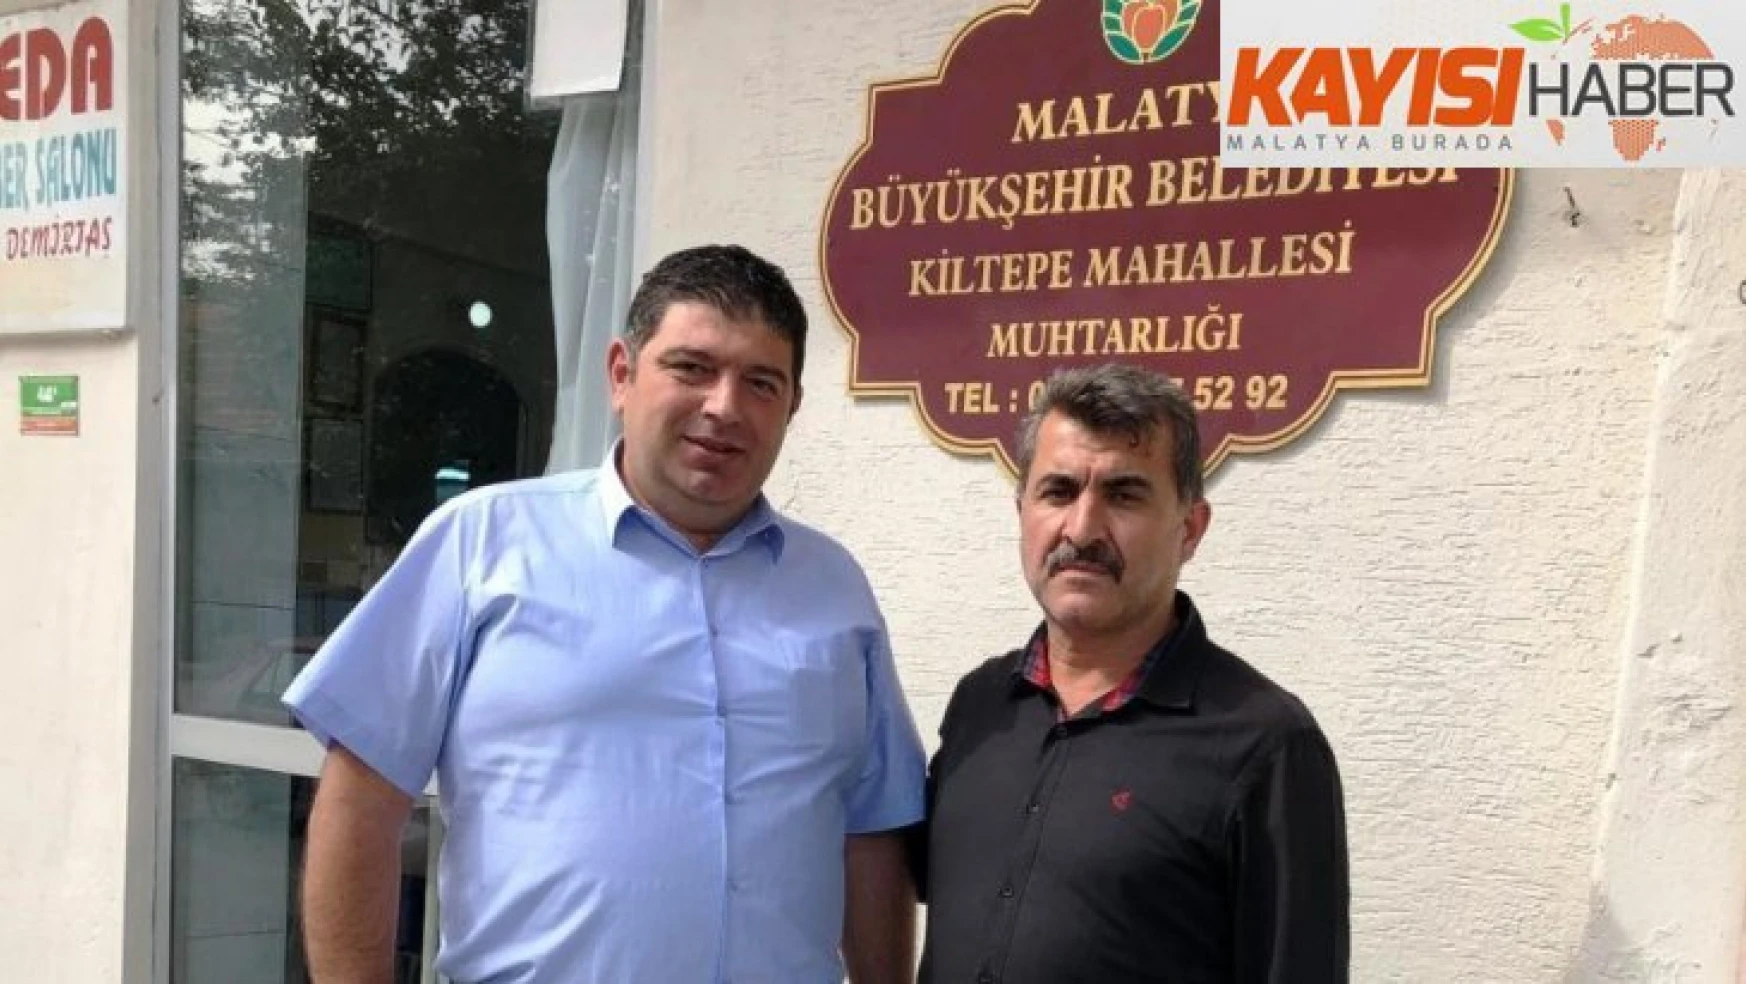 Parlak'tan Kiltepe Muhtarı Demirtaş'a geçmiş olsun ziyareti